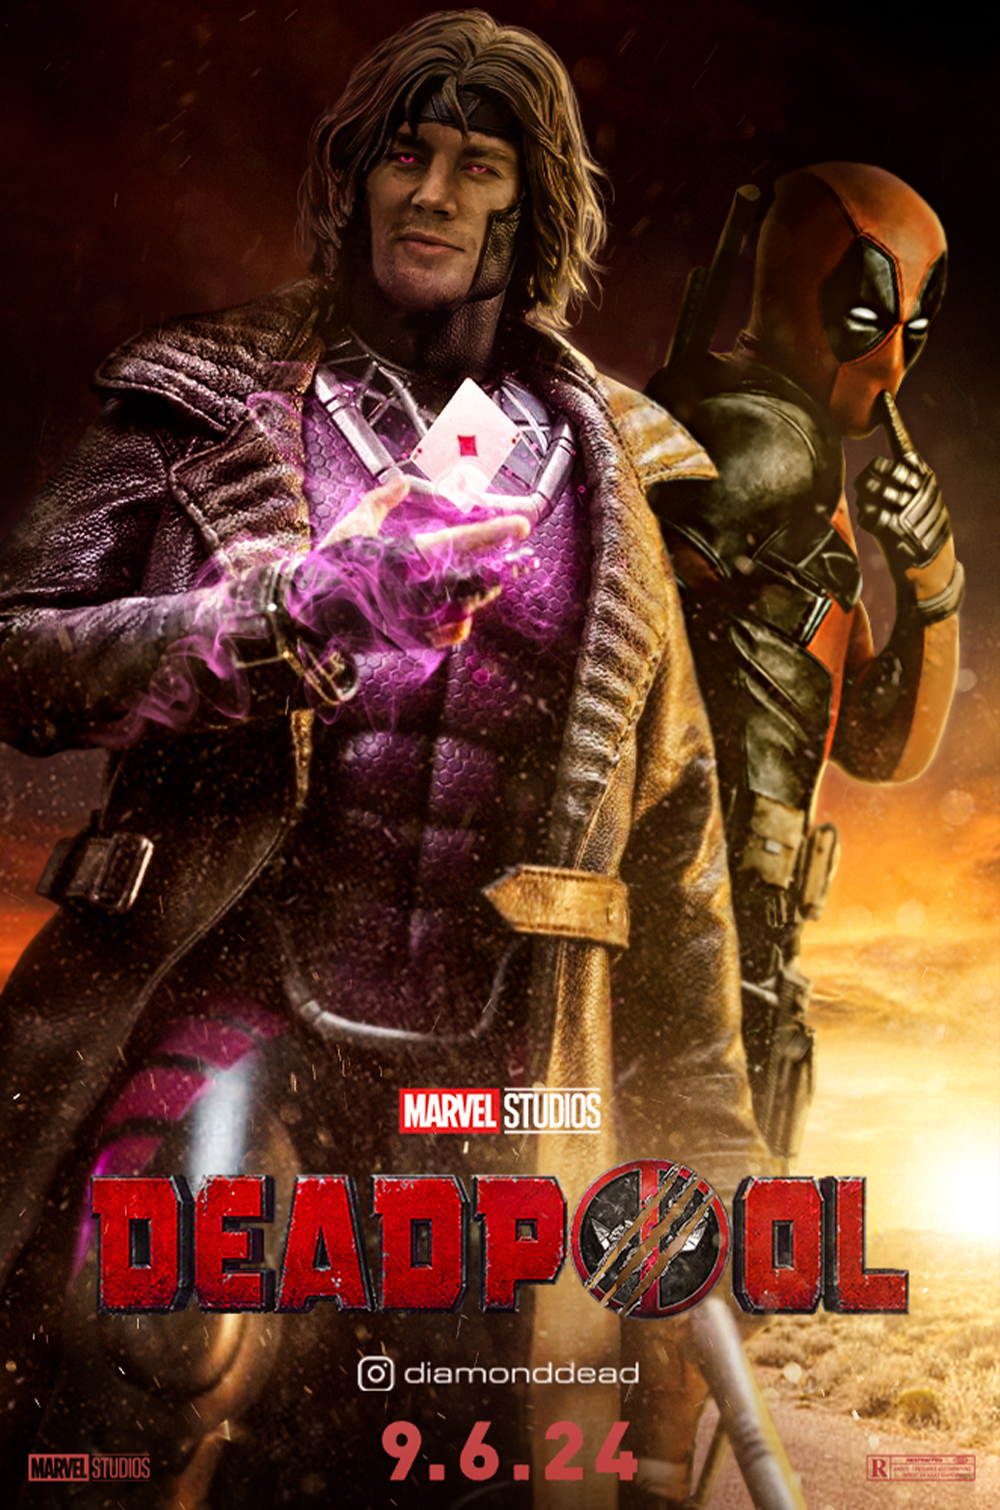 Channing Tatum as Gambit in Deadpool 3 by diamonddead-Art on DeviantArt